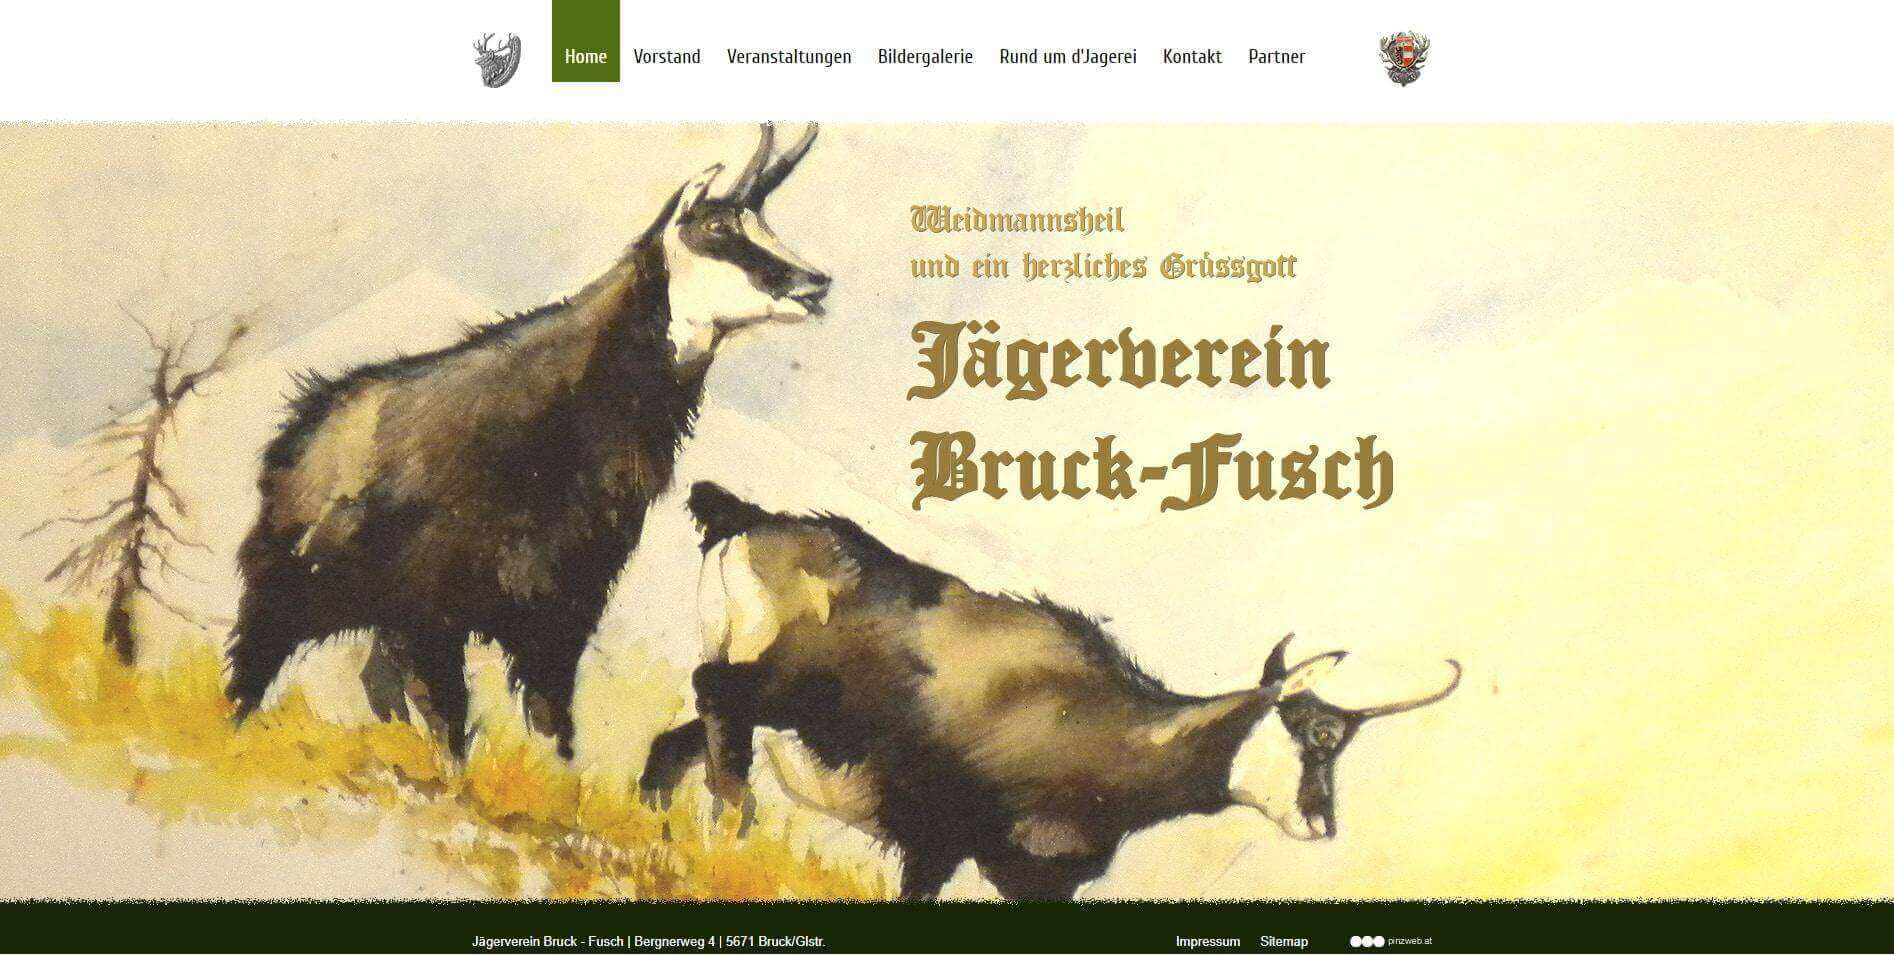 Martin Huber, Jägerverein Bruck-Fusch